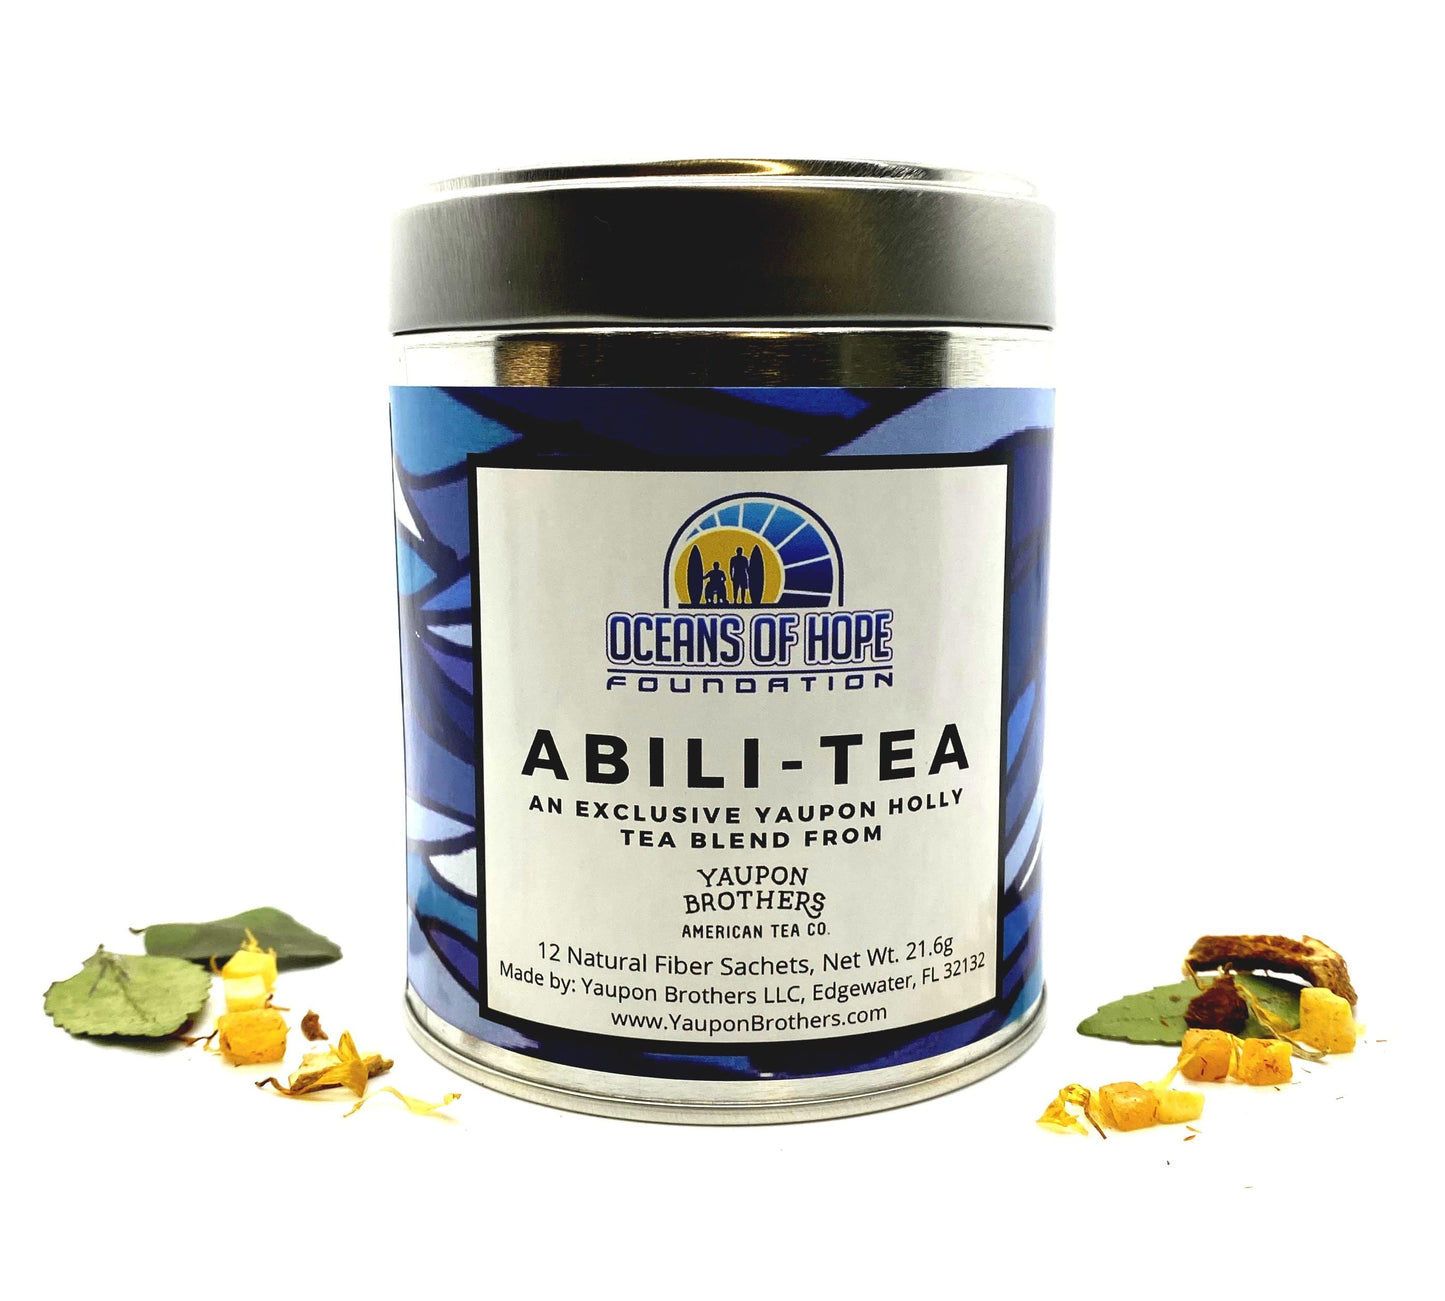 charitea Abili-Tea for Oceans of Hope